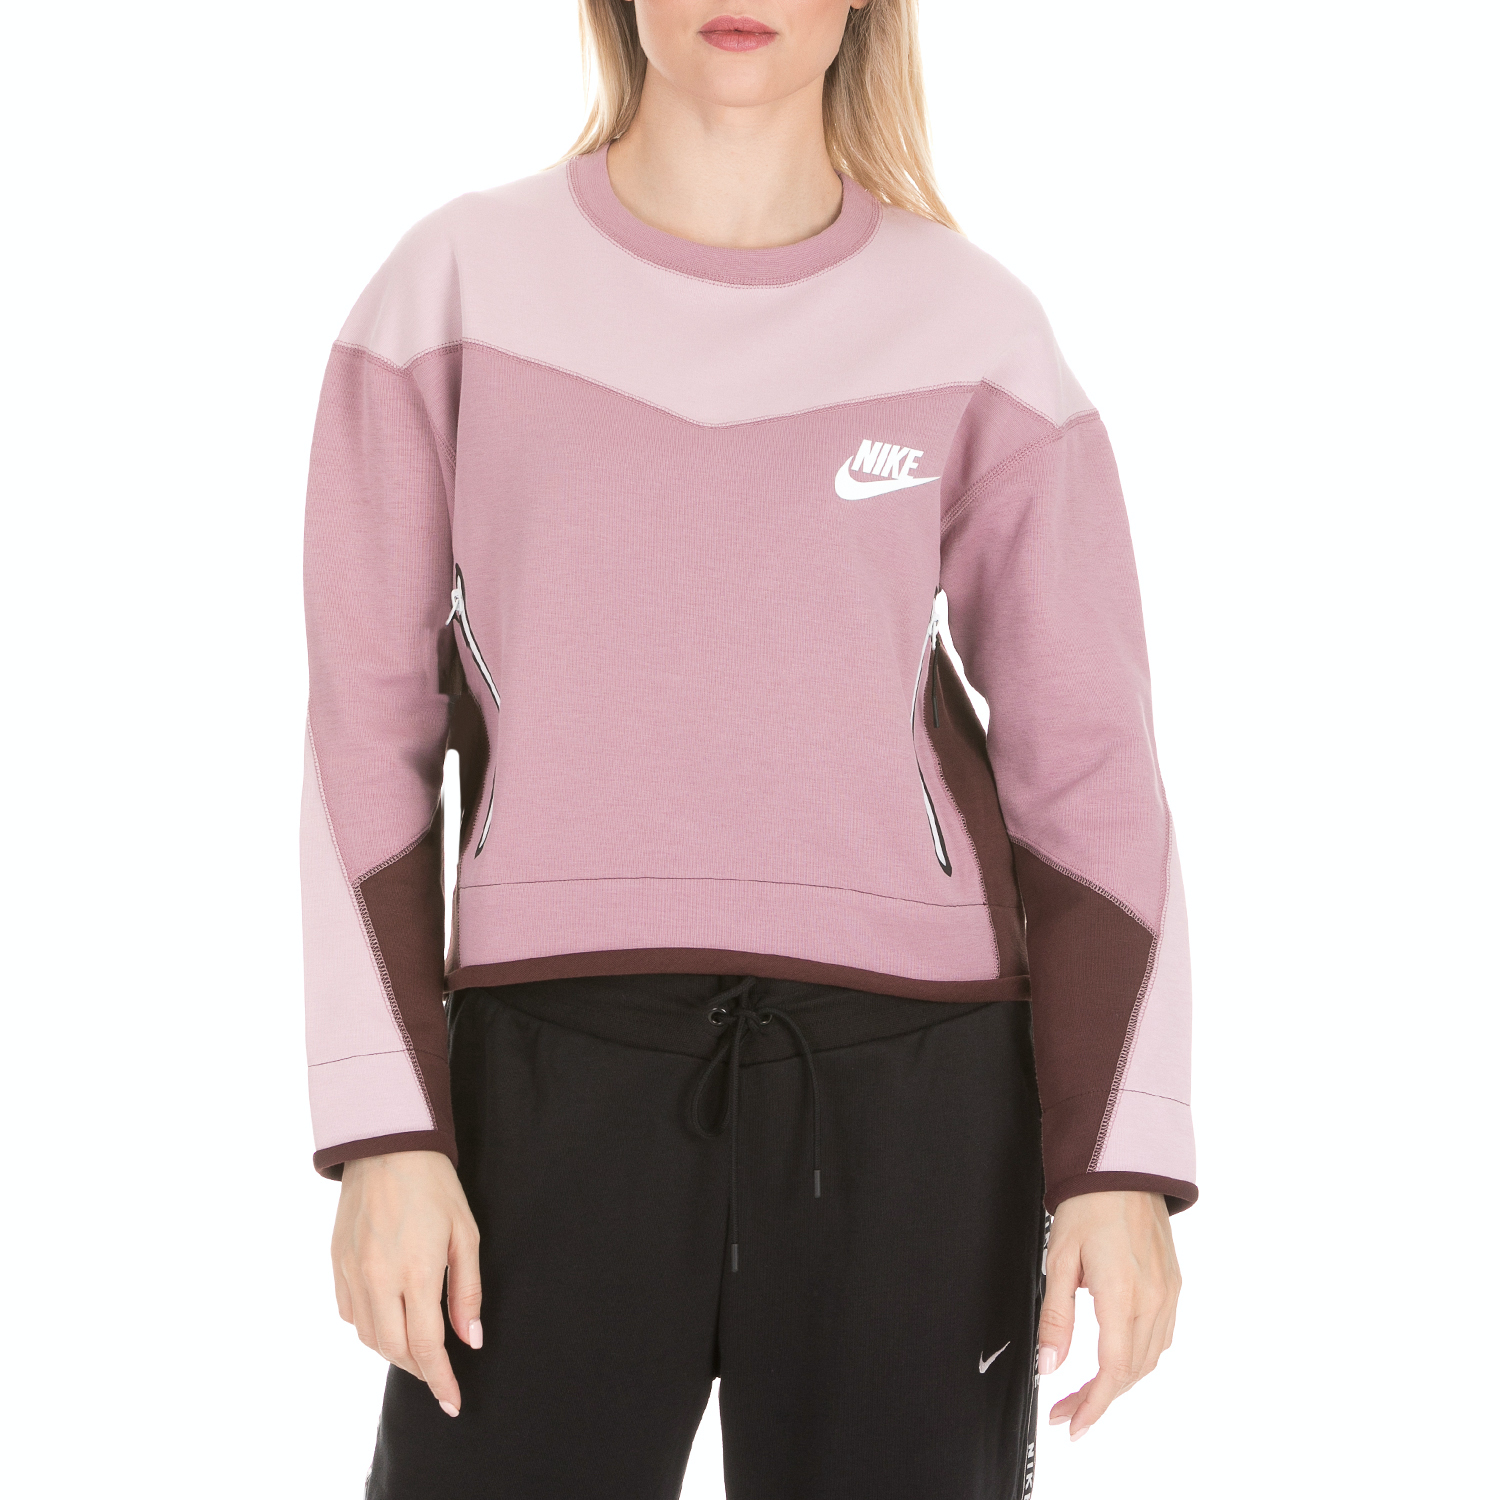 NIKE - Γυναικεία φούτερ μπλούζα NIKE NSW TCH FLC ροζ μπορντό Γυναικεία/Ρούχα/Φούτερ/Μπλούζες